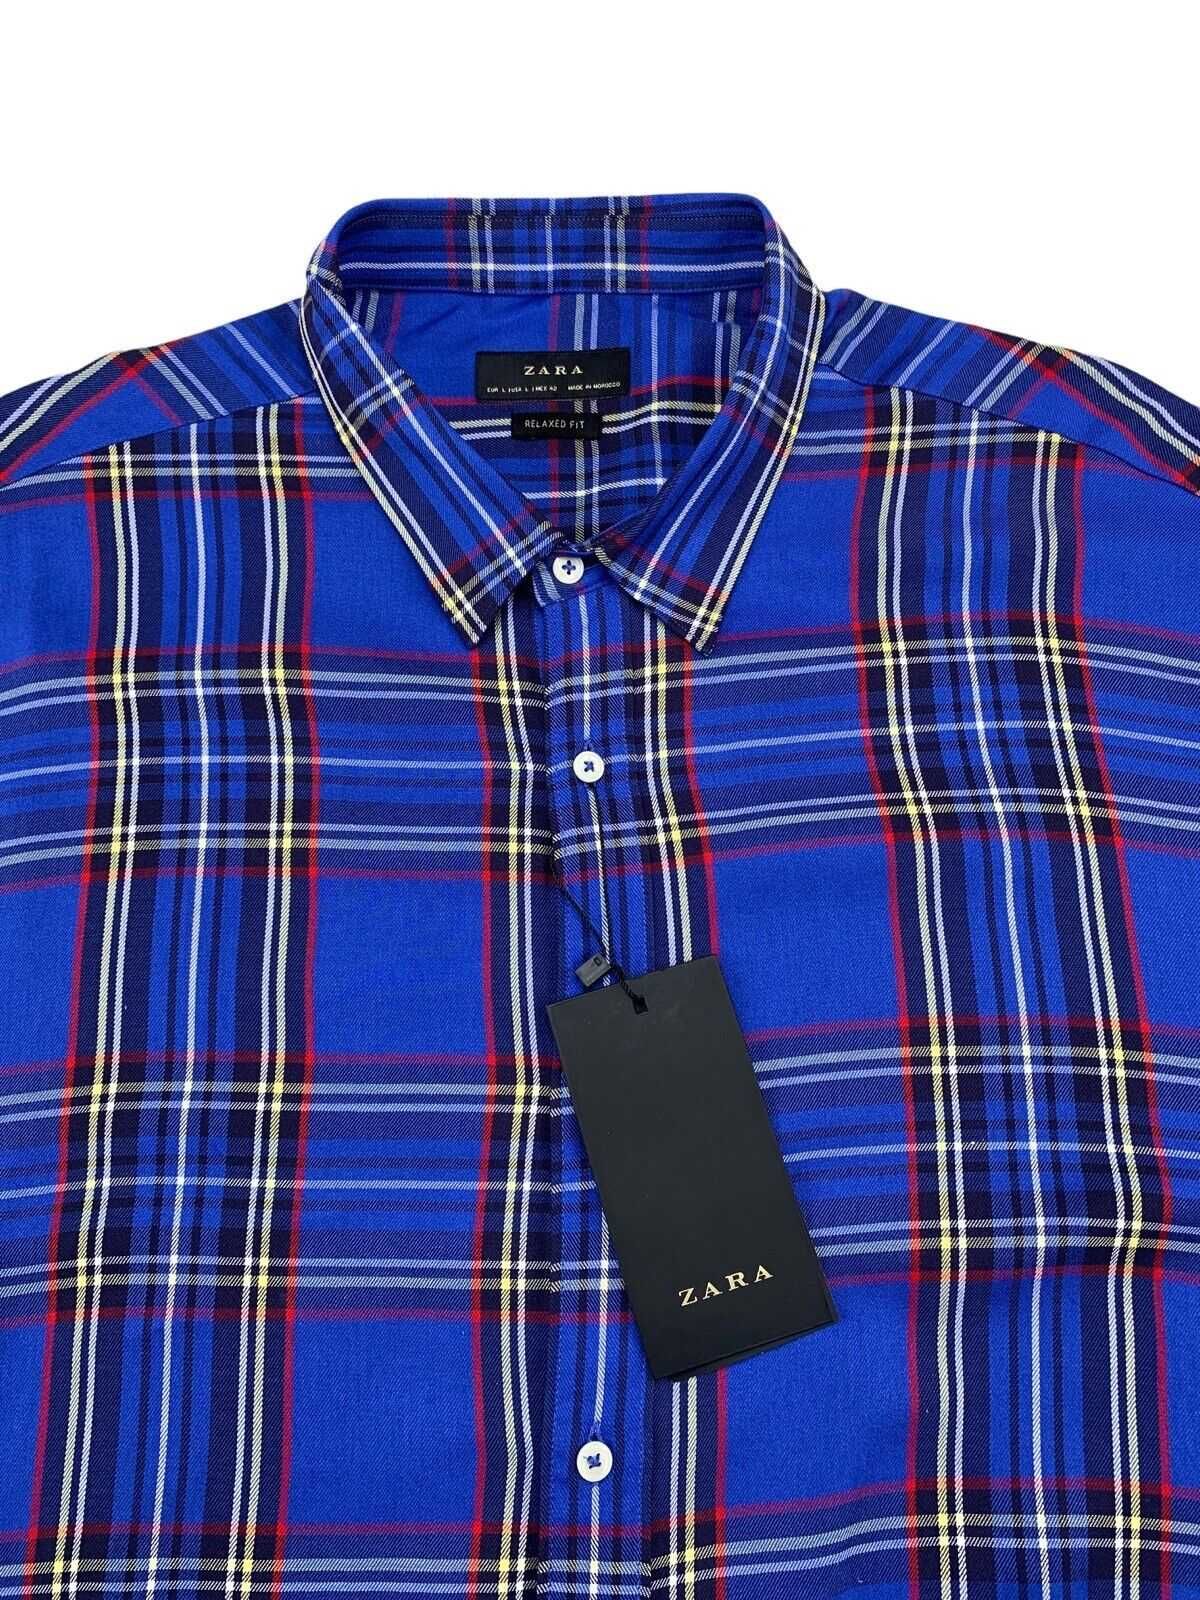 ZARA Новая мужская рубашка L XL 100% вискоза с бирками